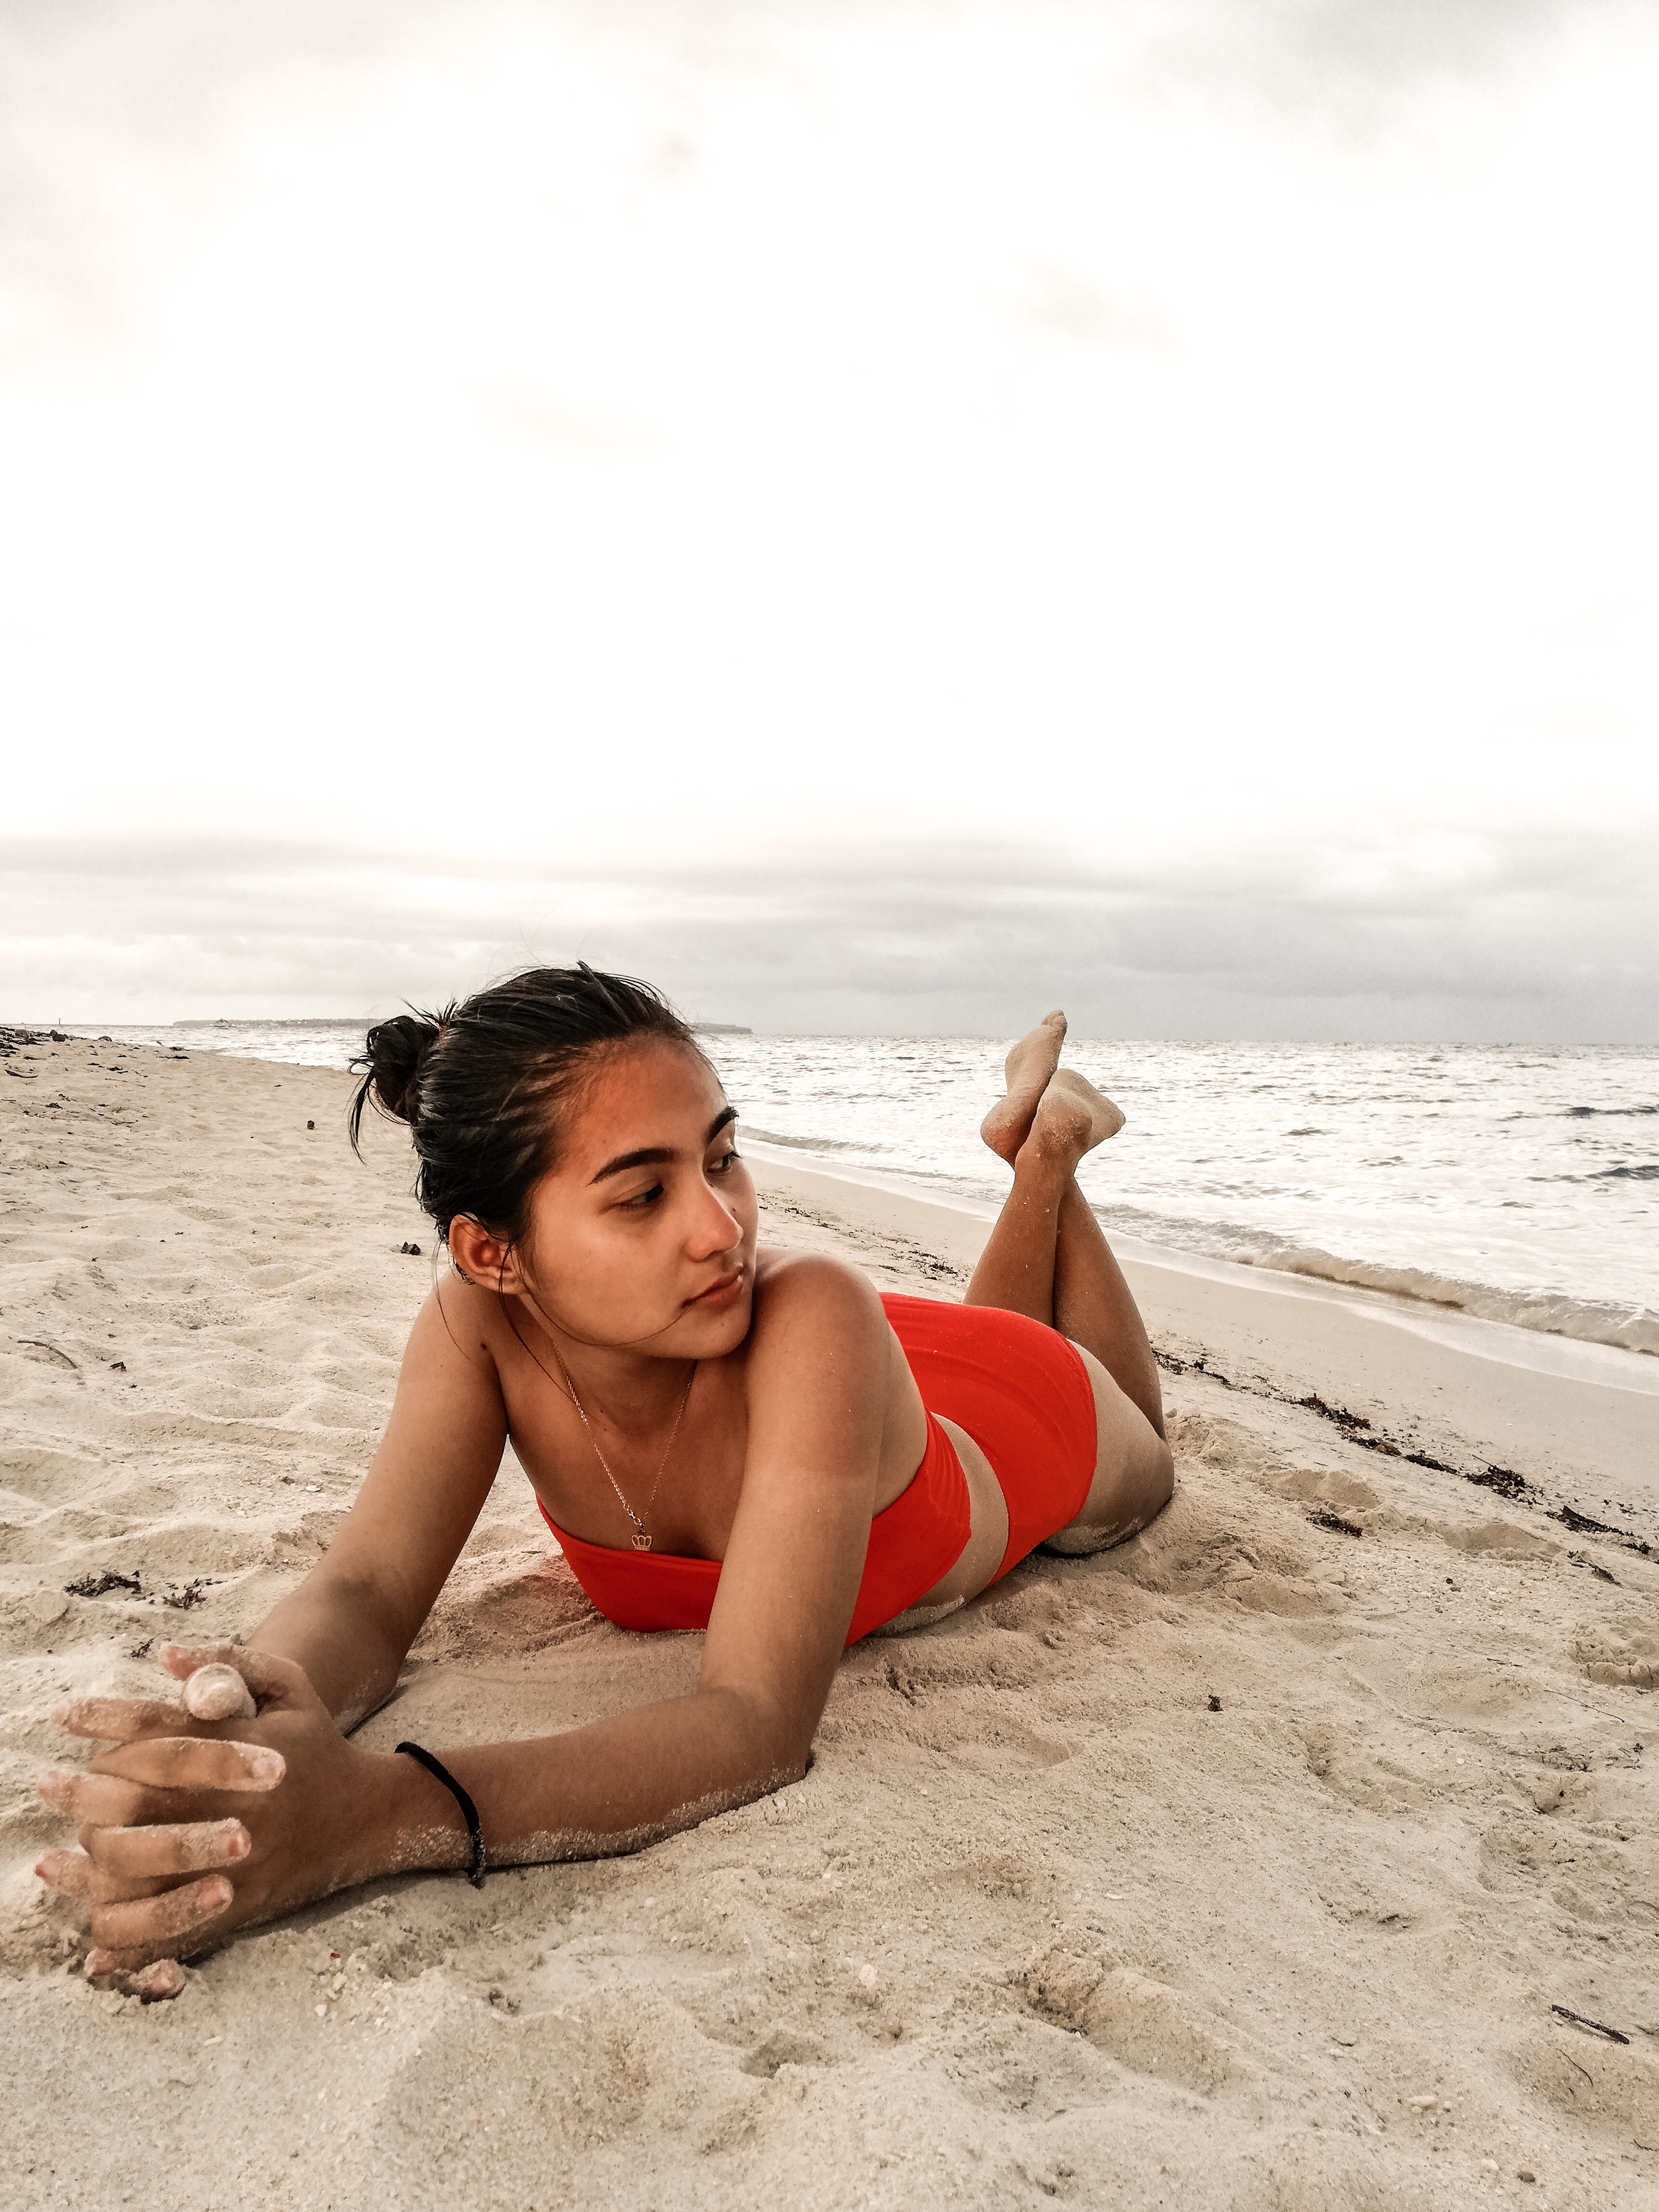 Woman Wearing Red Bikini Laying On Beach Sand · Free Stock Photo